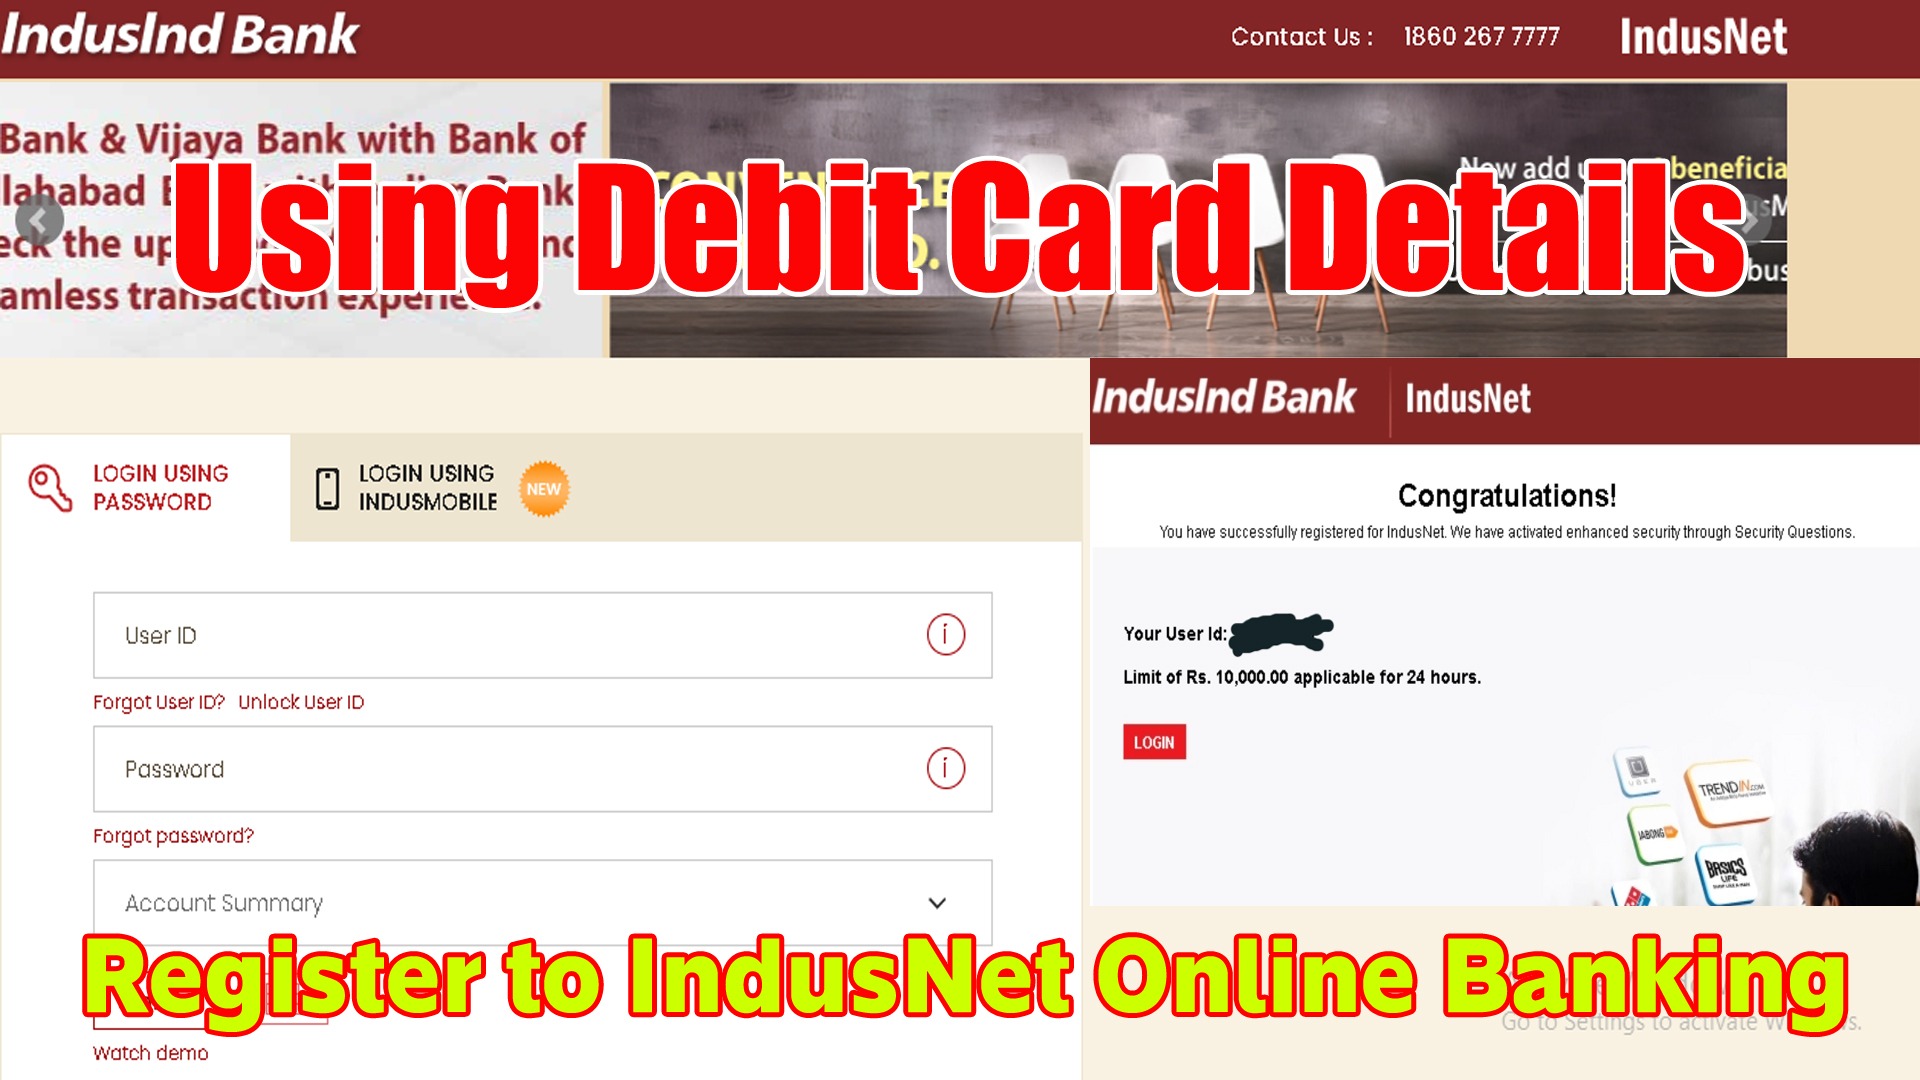 Register to IndusNet Online Banking